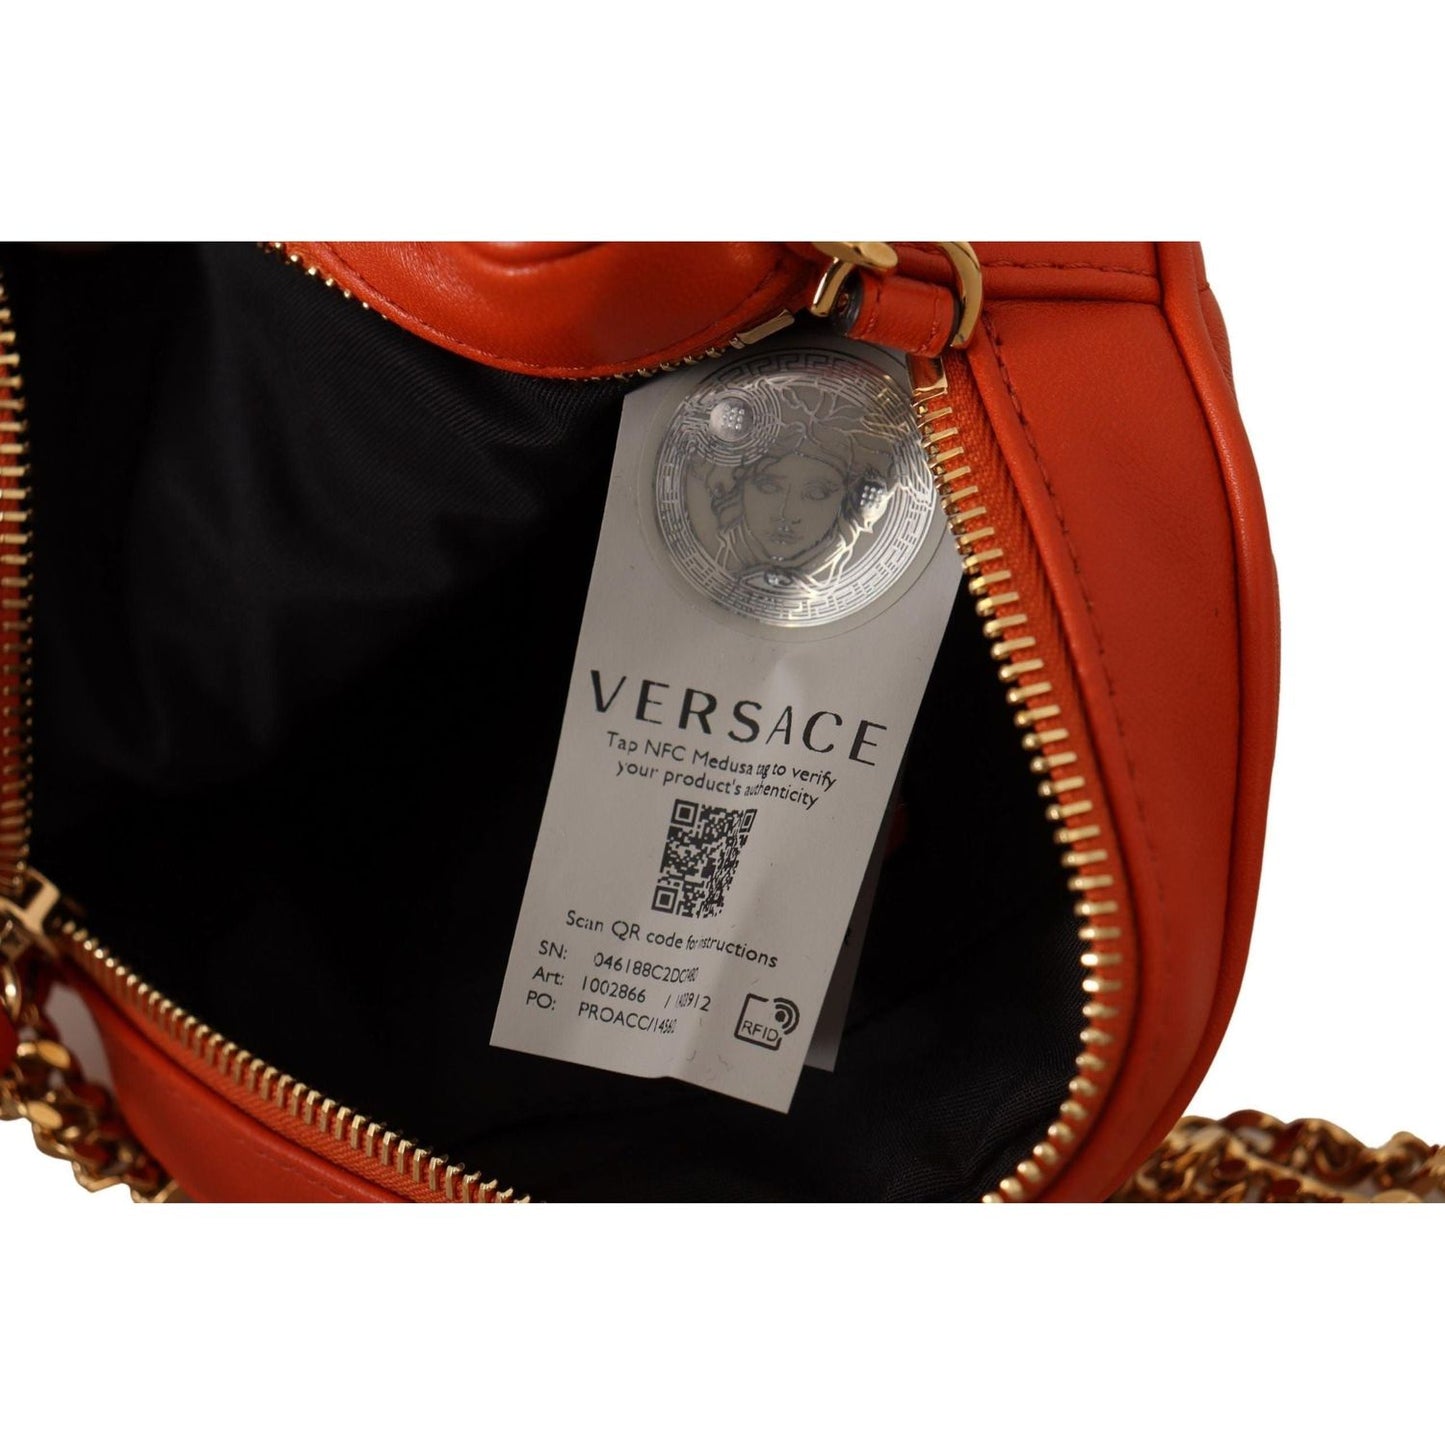 Versace Elegant Round Nappa Leather Crossbody Bag red-nappa-leather-medusa-round-crossbody-bag Crossbody Bag IMG_8875-scaled-77593941-54b.jpg